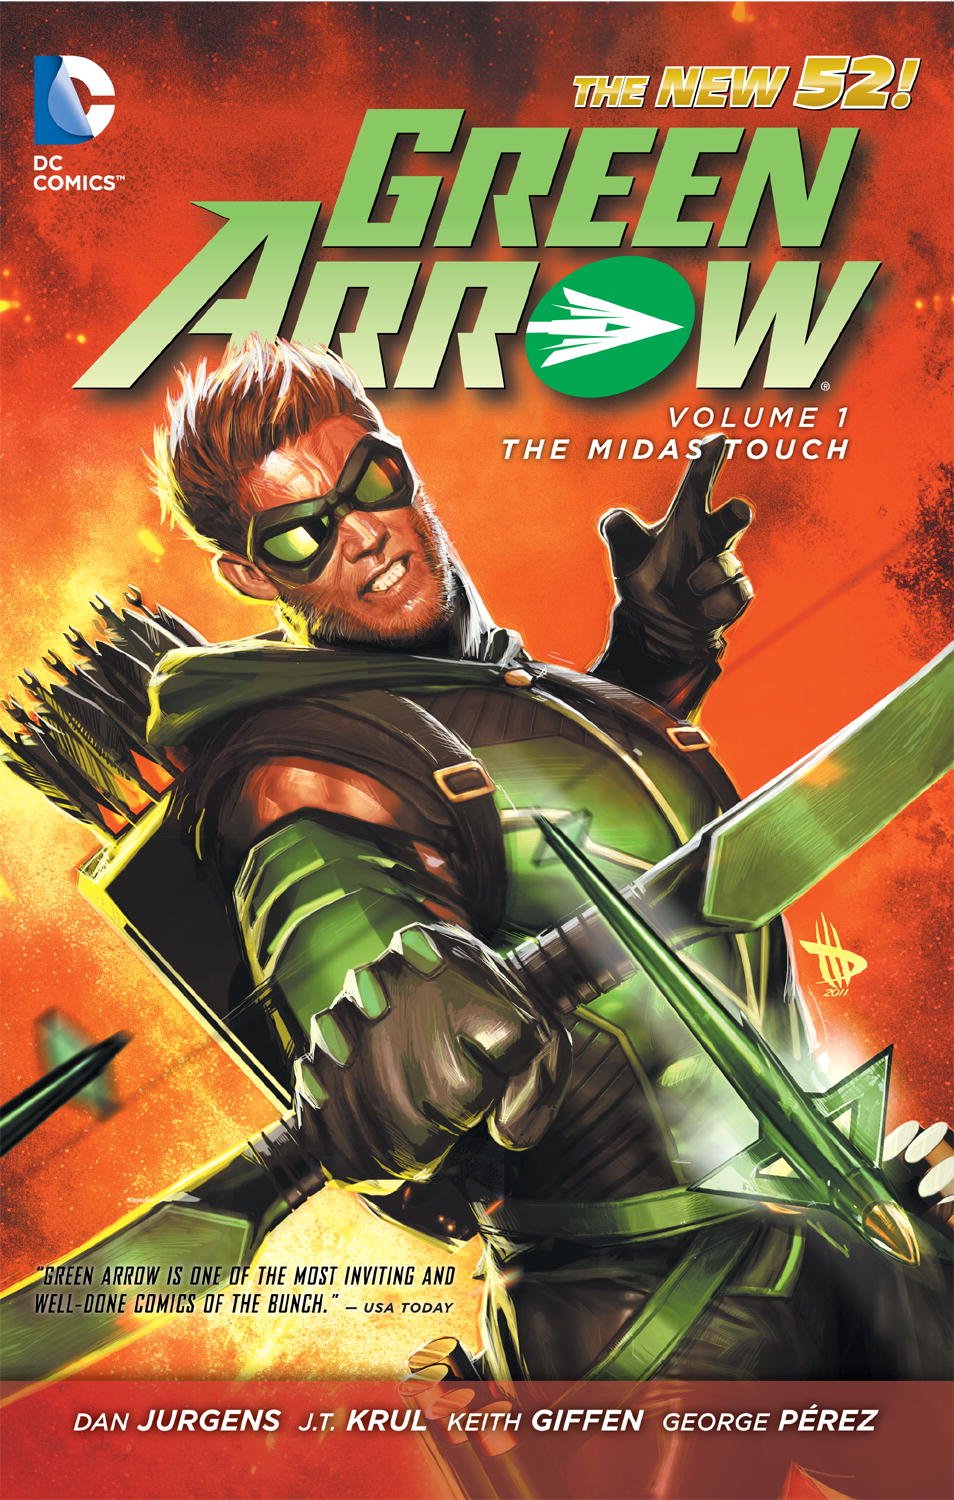 Green Arrow, Vol. 1 by Kevin Smith